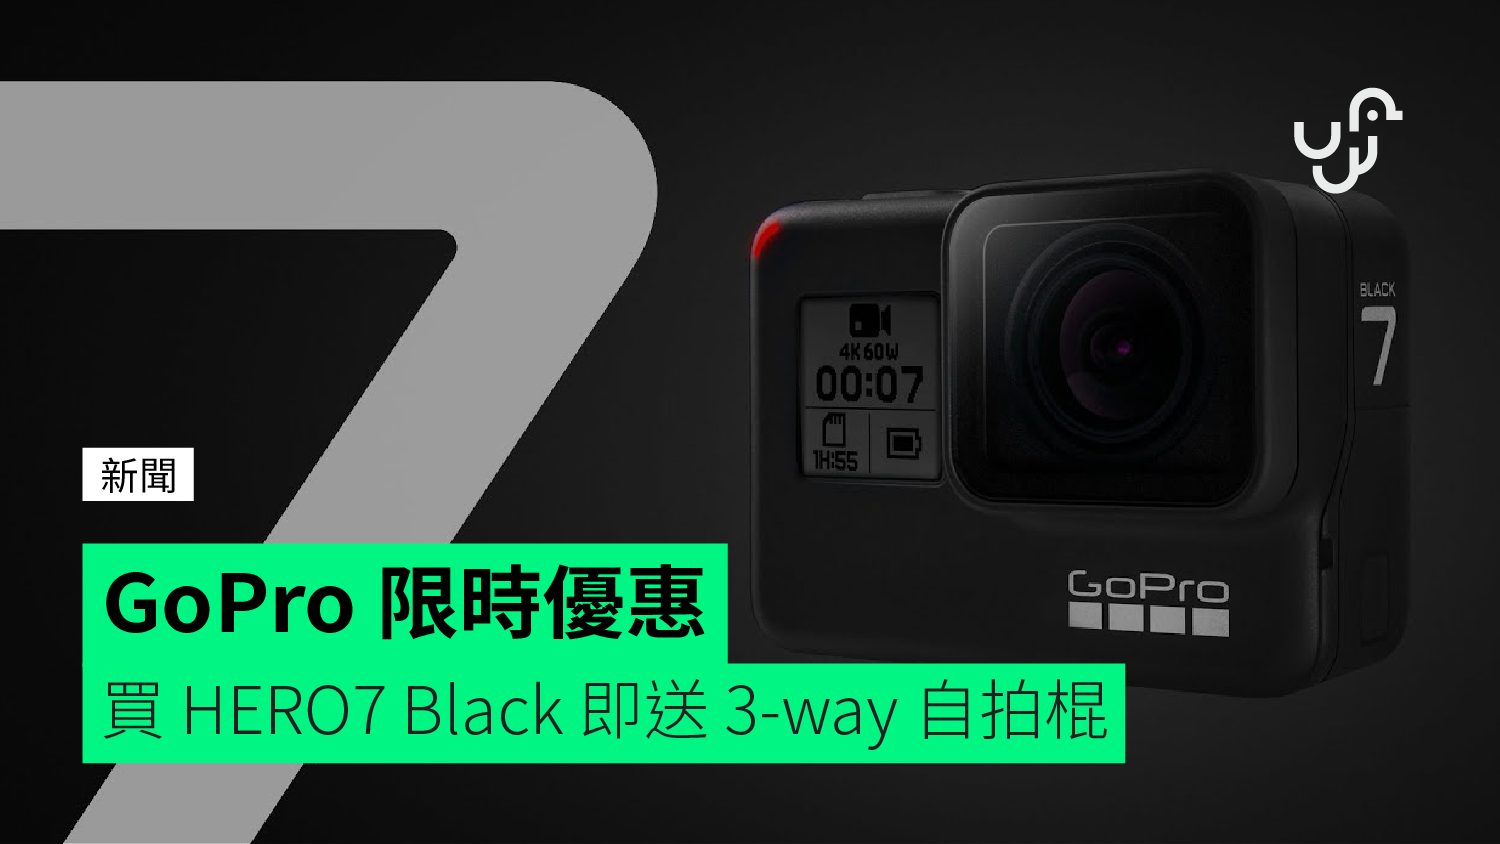 GoPro 推限時優惠 買 HERO7 Black 即送 3-way 自拍棍 | Unwire.hk | LINE TODAY